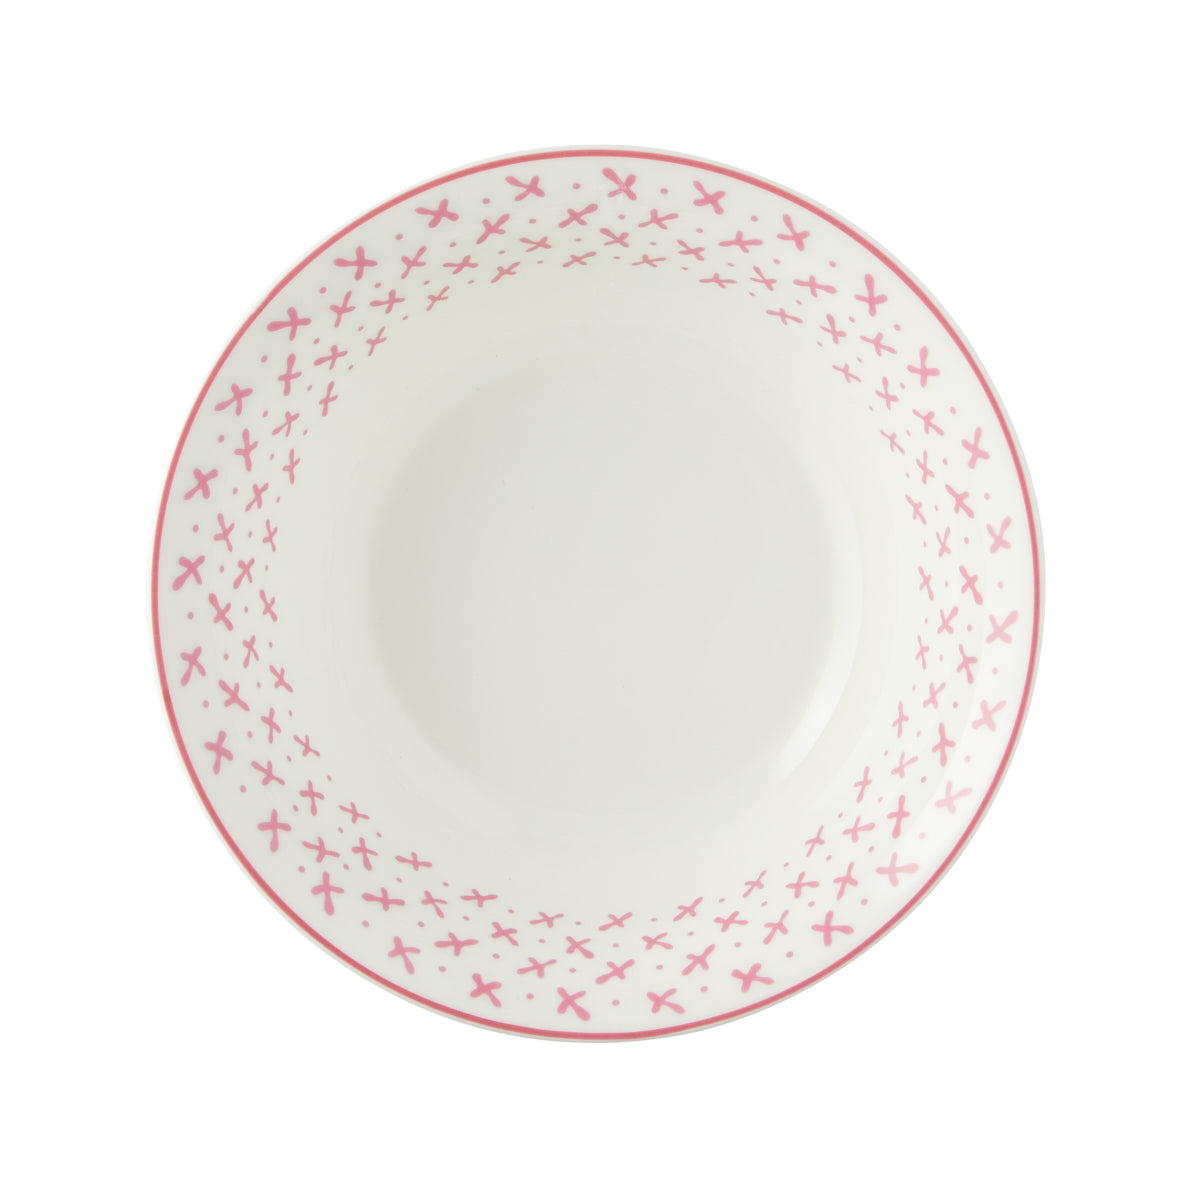 Nina Campbell Oatmeal Bowl - Pink Sprig